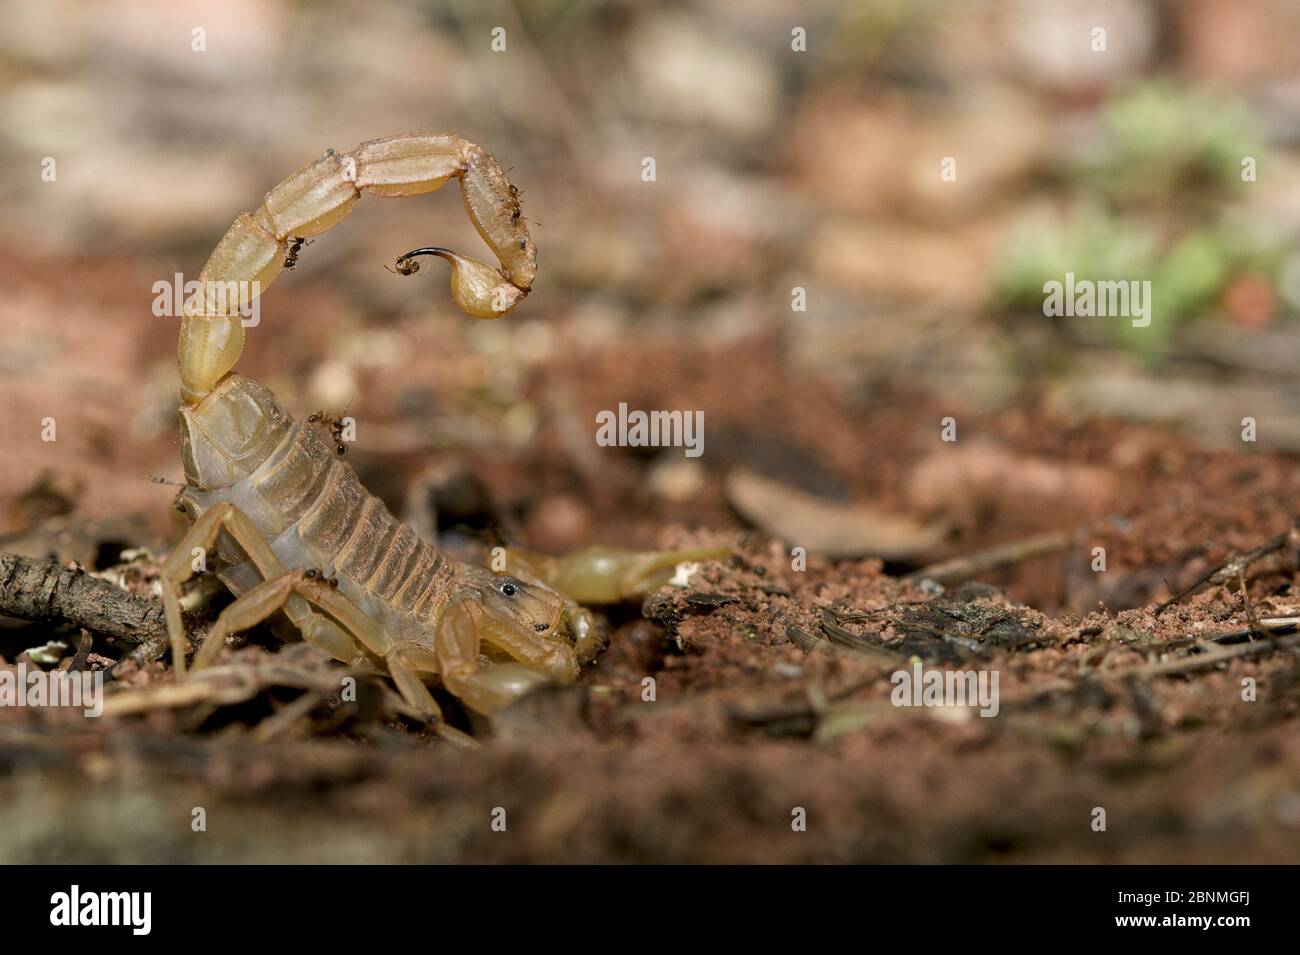 European buthus scorpion (Buthus occitanus), Plaine des Maures National Natural Reserve, France, April. Stock Photo